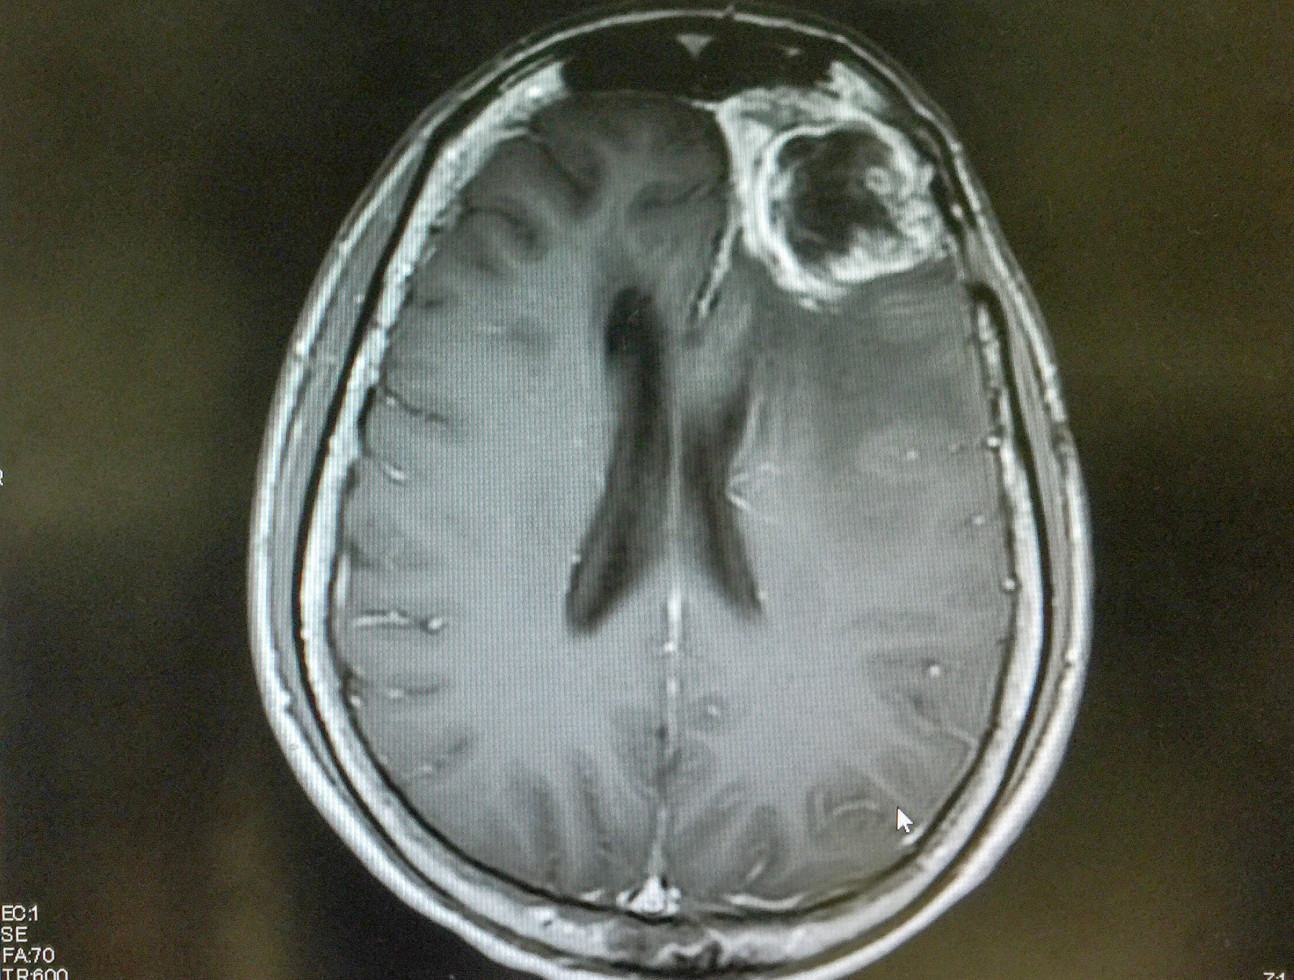 An MRI of a human brain